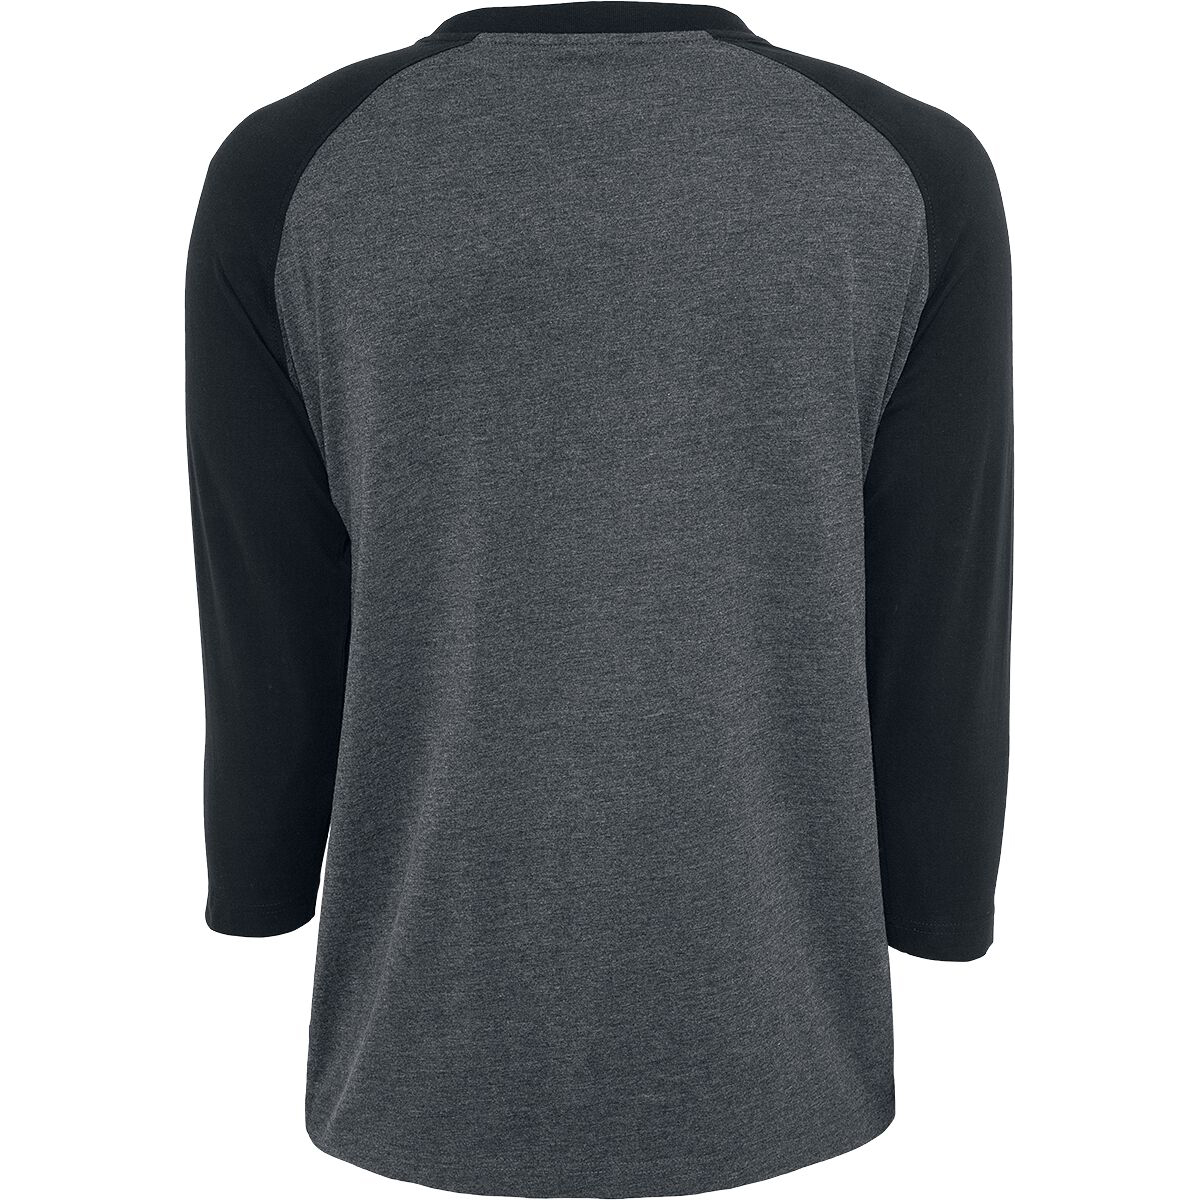 Black & Grey Raglan T-Shirt